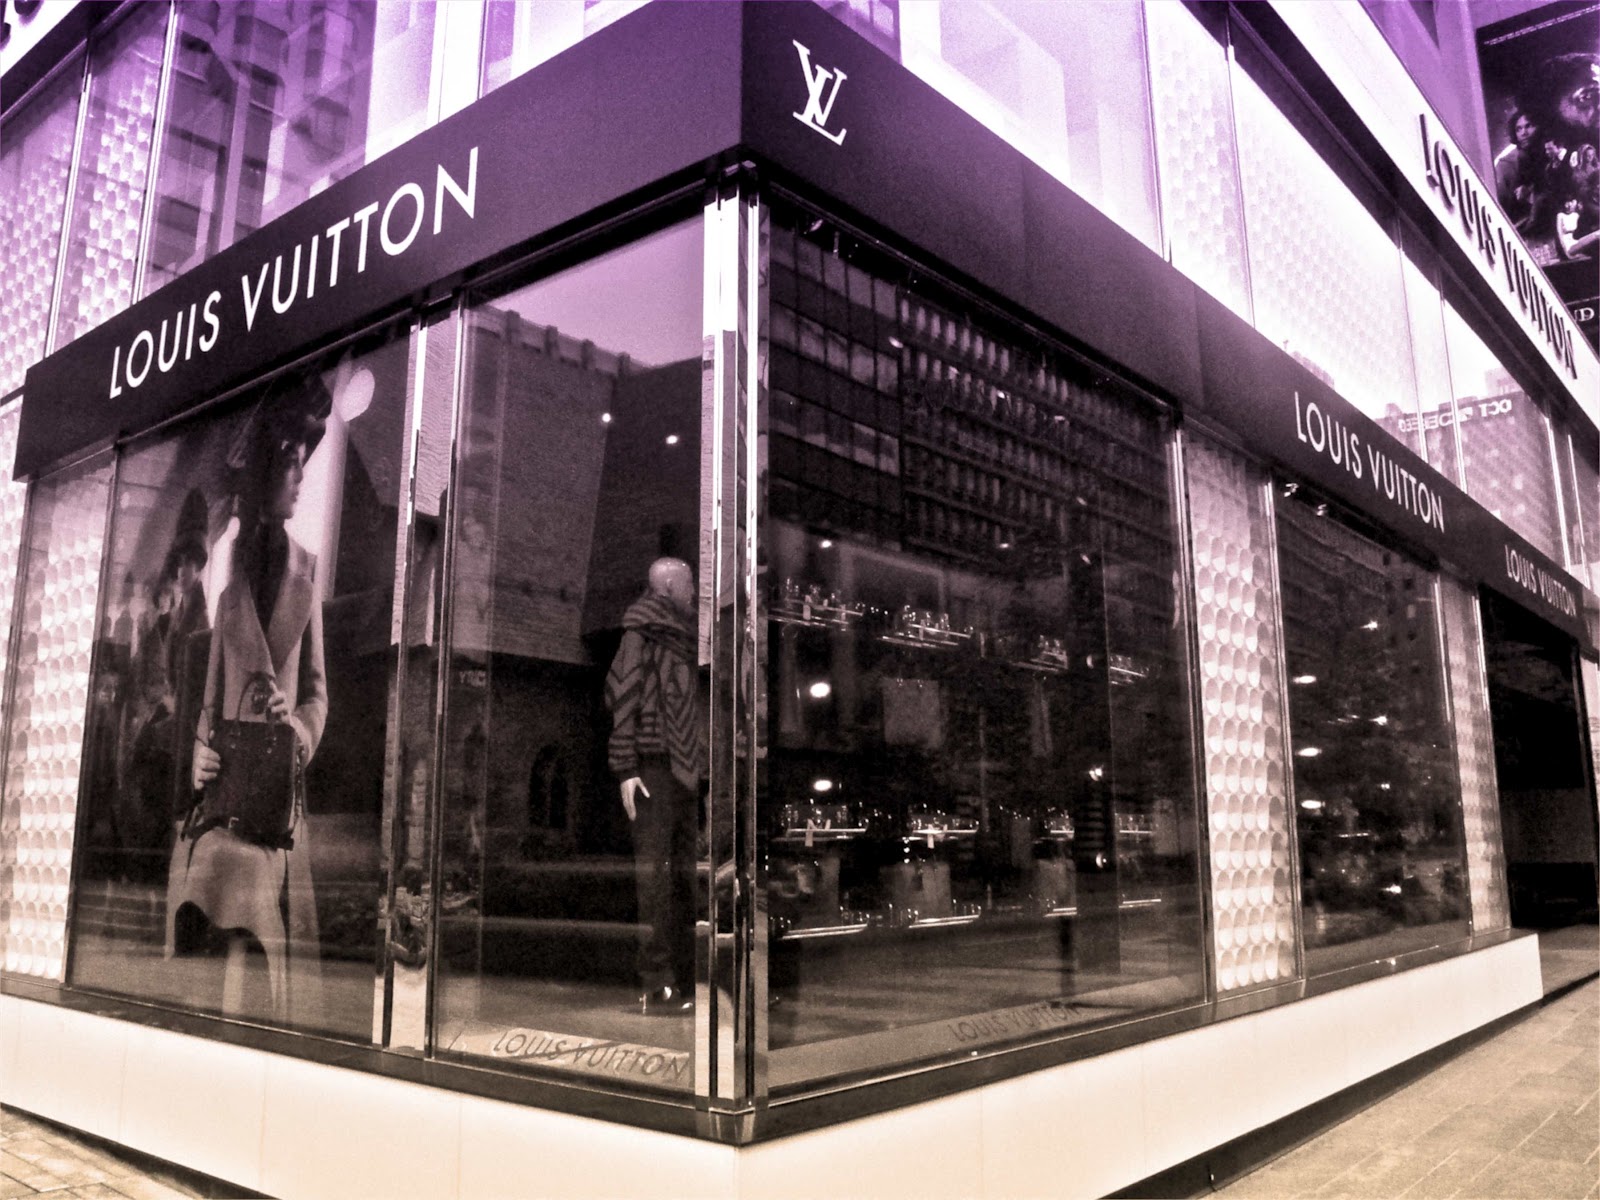 Louis Vuitton Toronto Yorkville